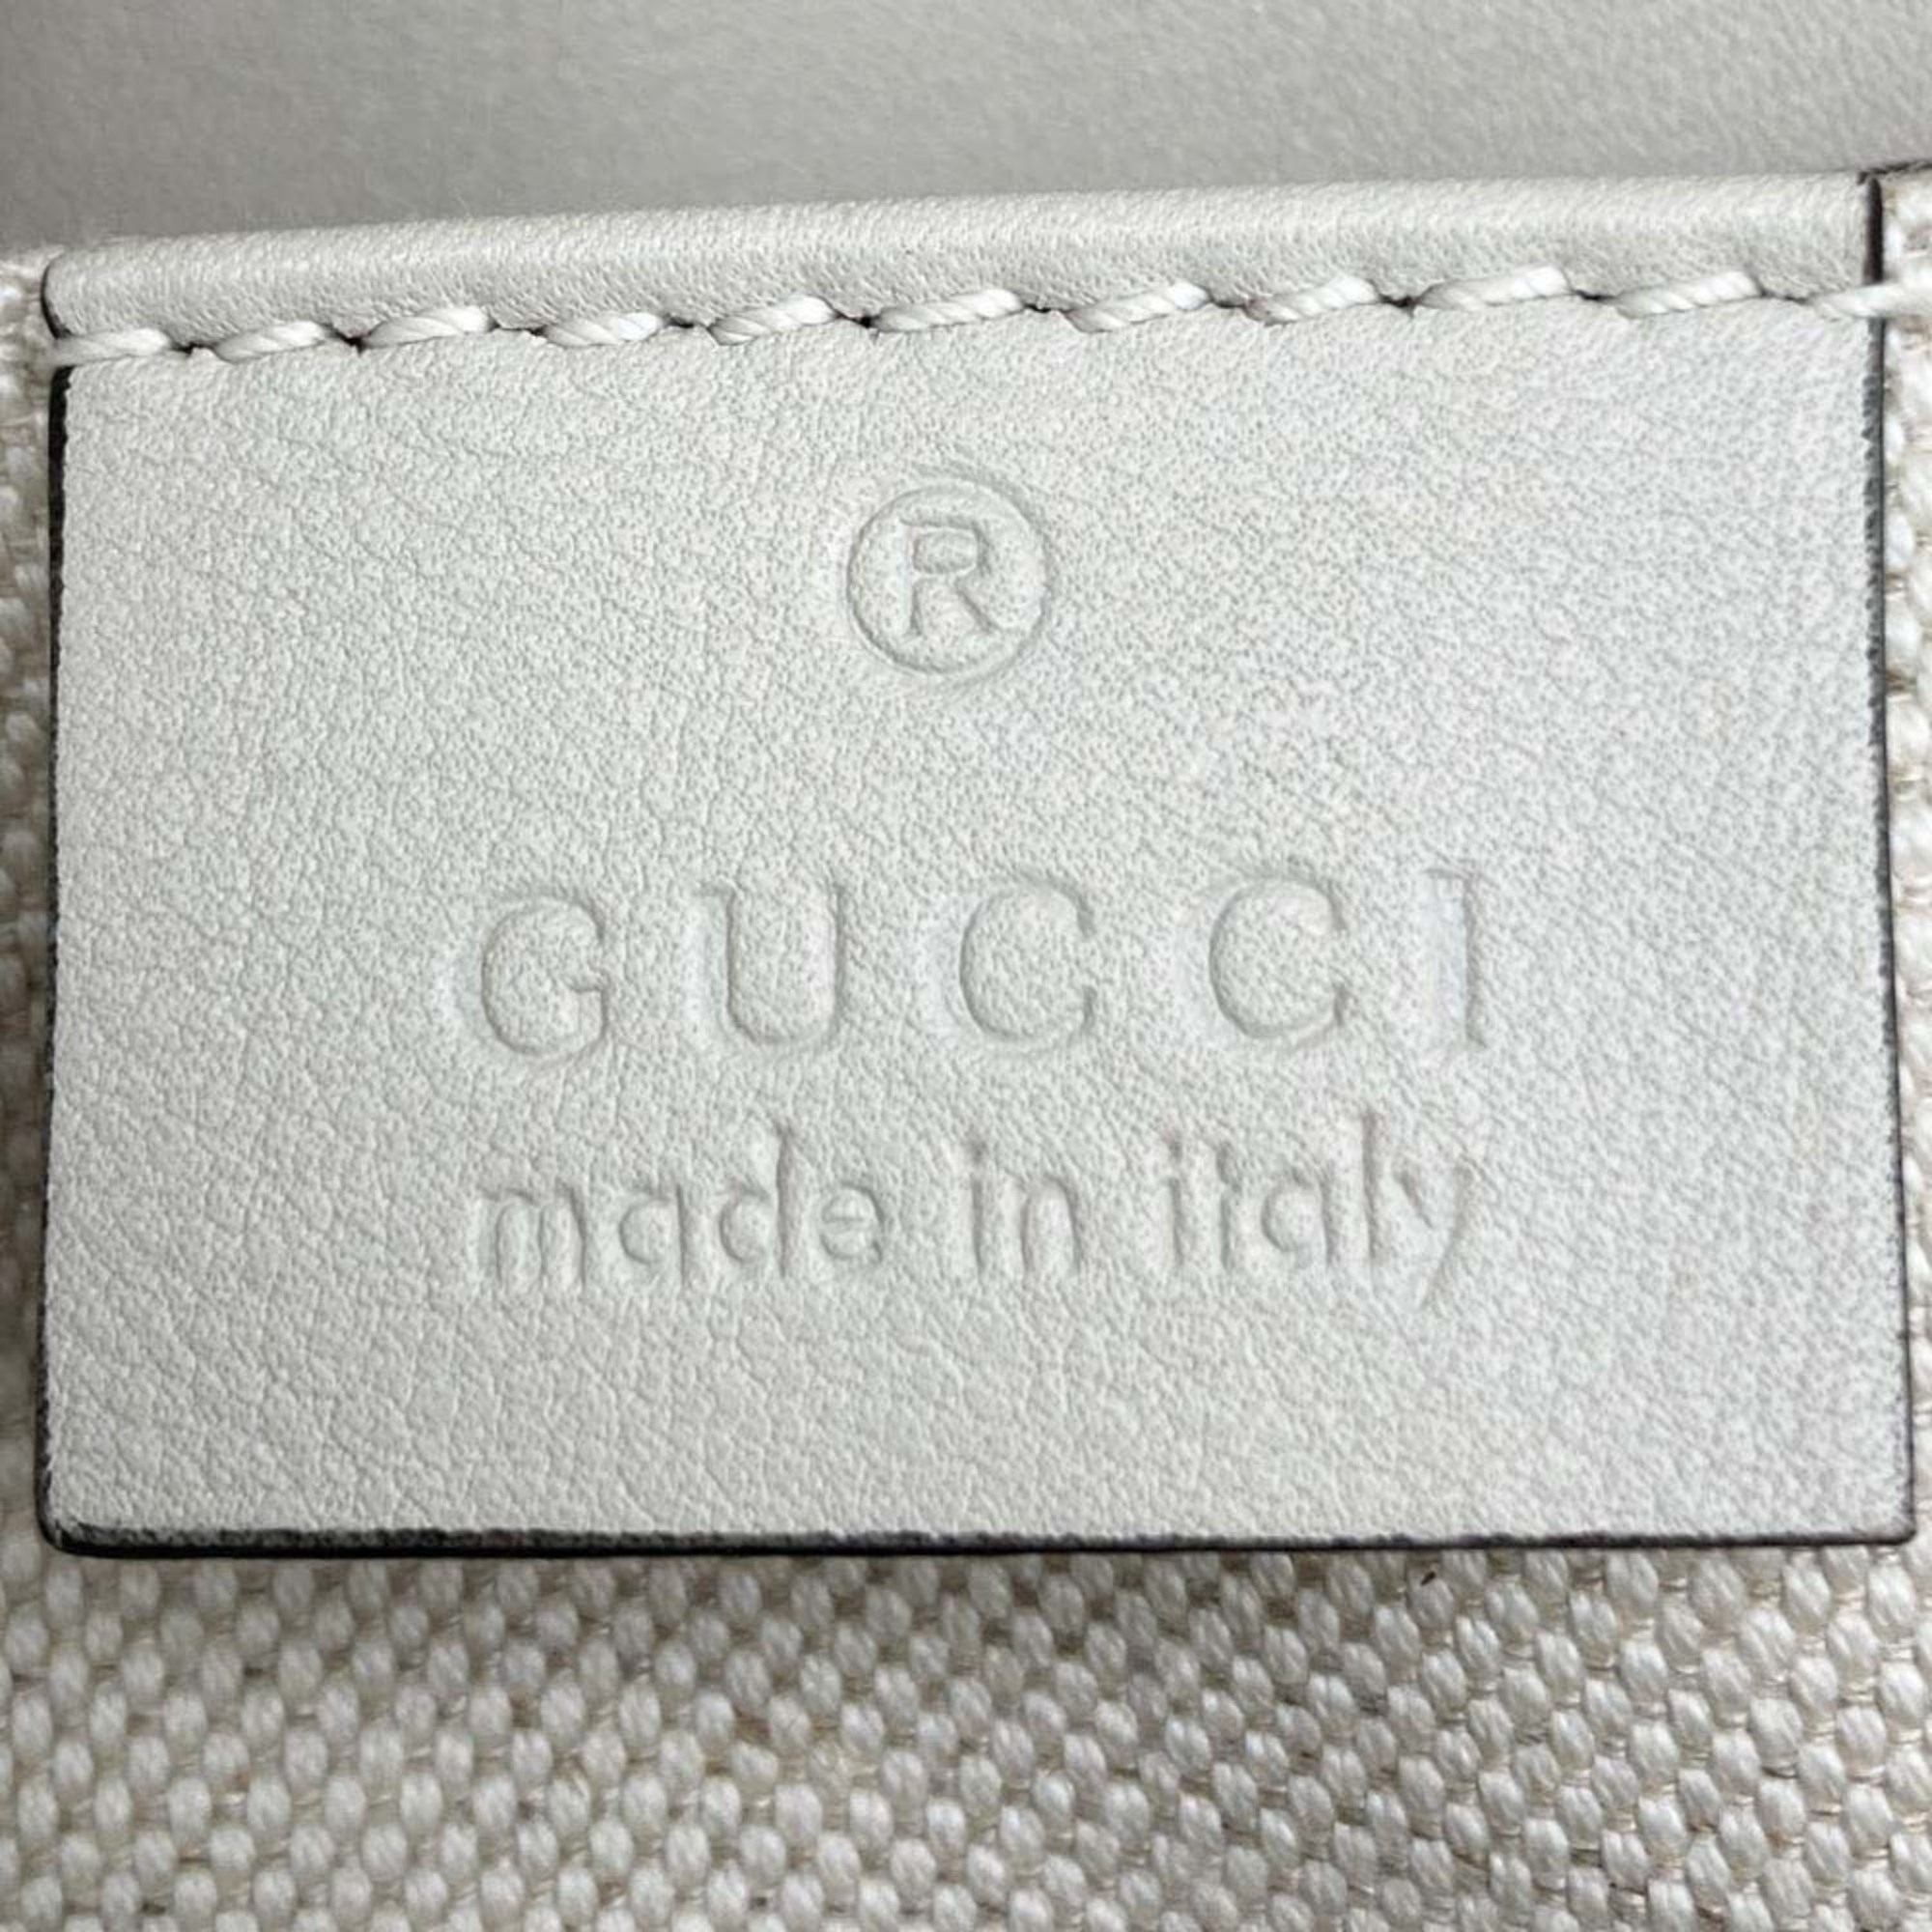 Gucci Guccissima Chain Shoulder Bag Horsebit Tassel Ivory White Leather 295402 GUCCI